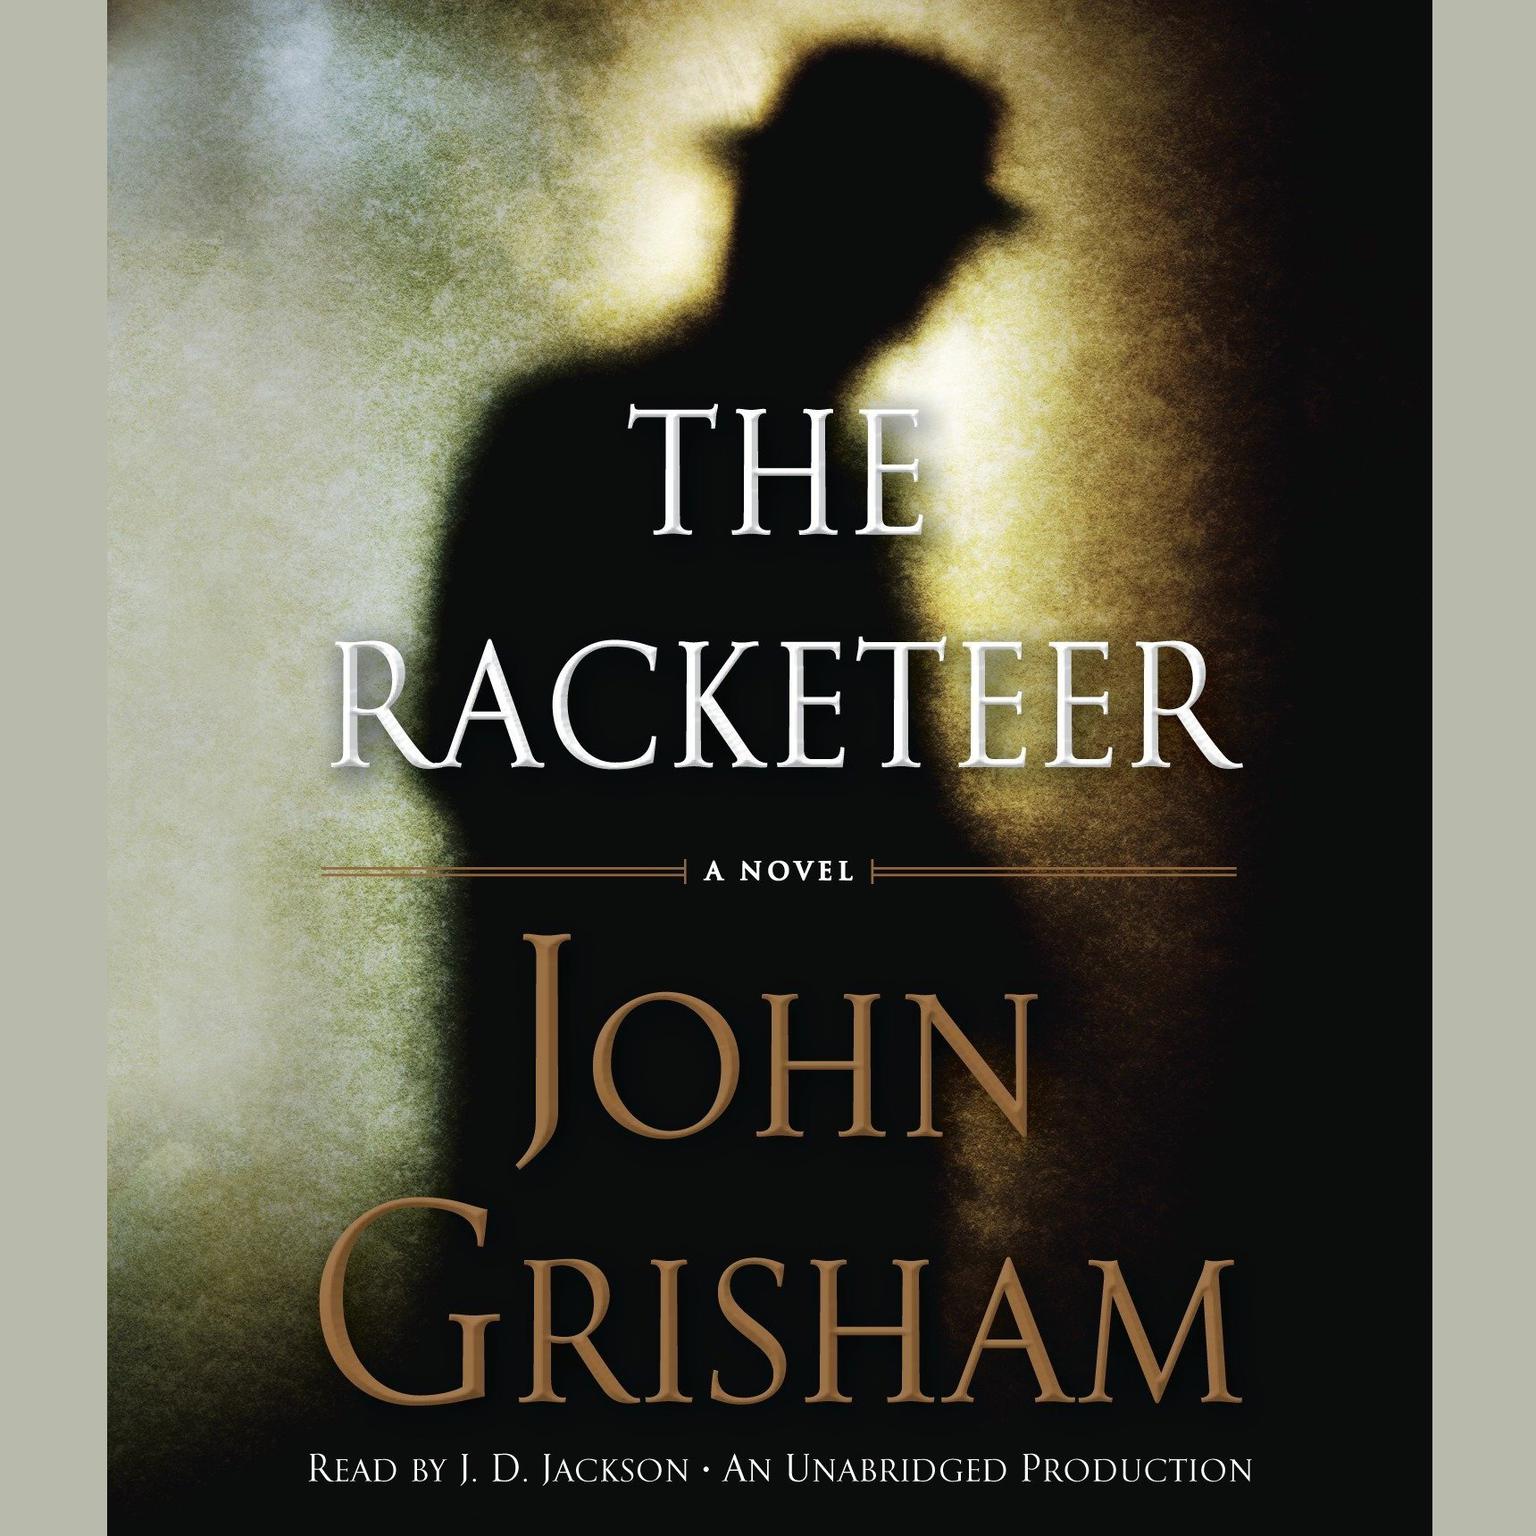 The Racketeer Audiobook, by John Grisham